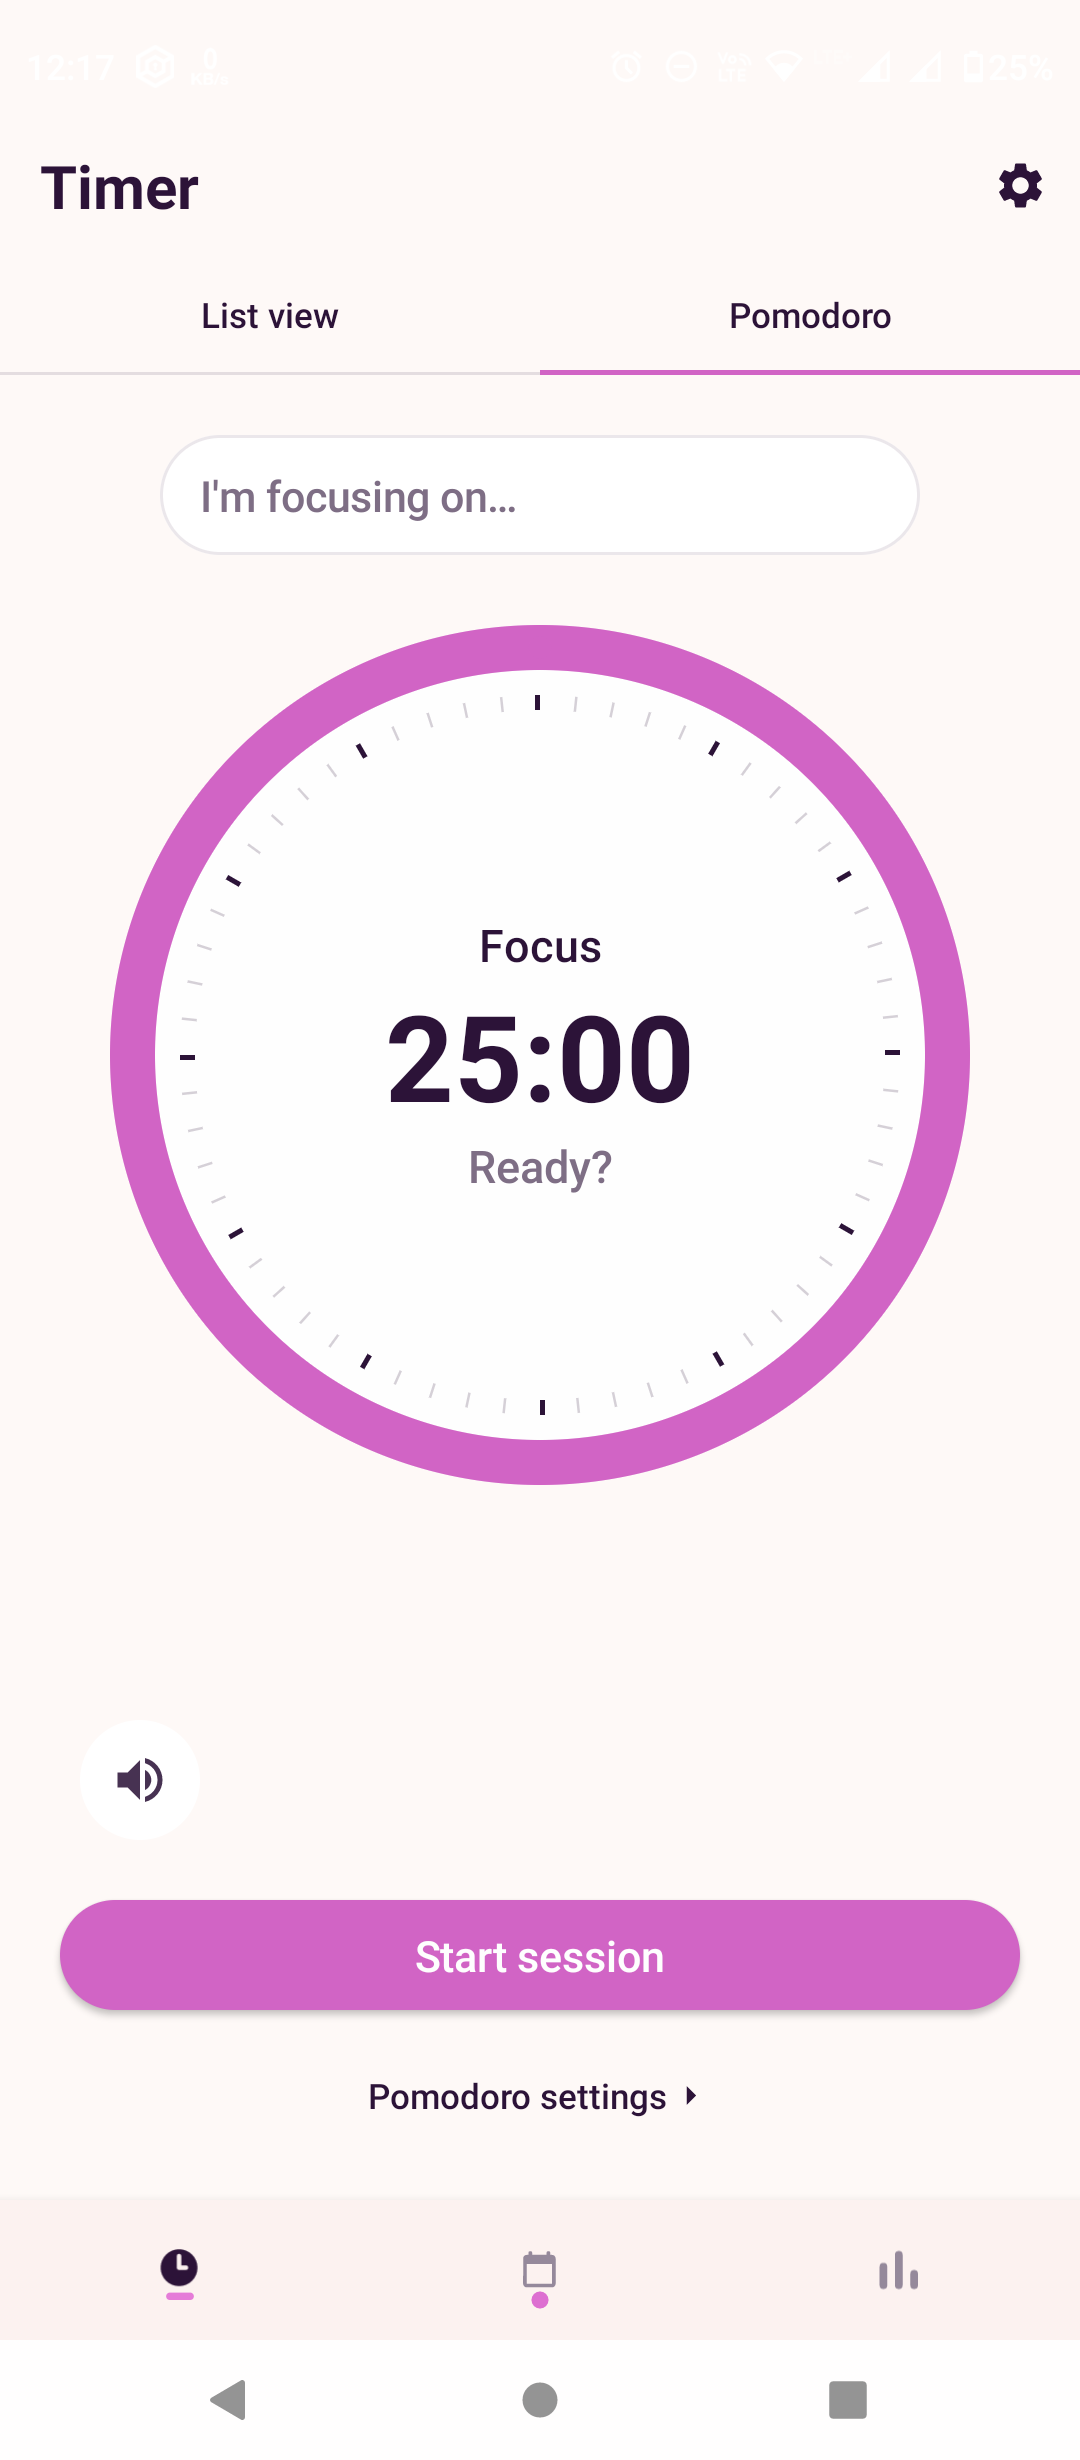 Pomodoro timer setting on Toggl Track app